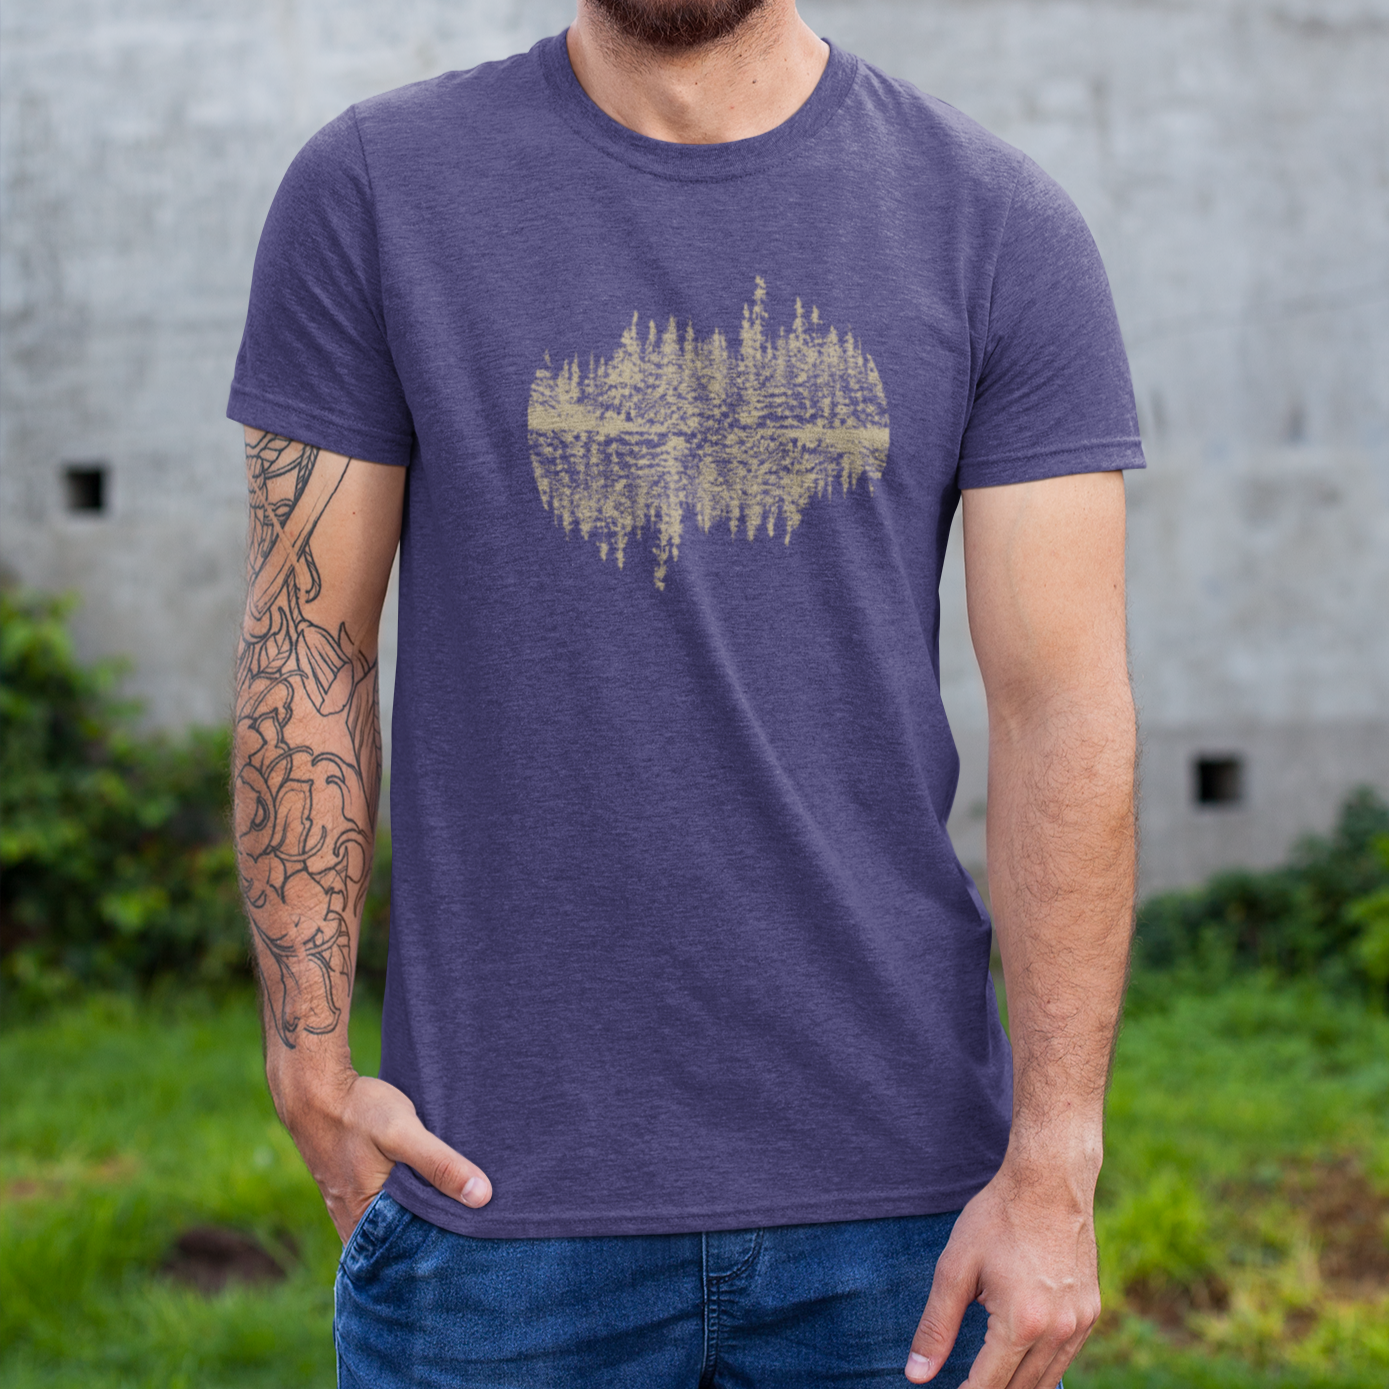 MiroirRiorim-T-shirt homme/unisexe